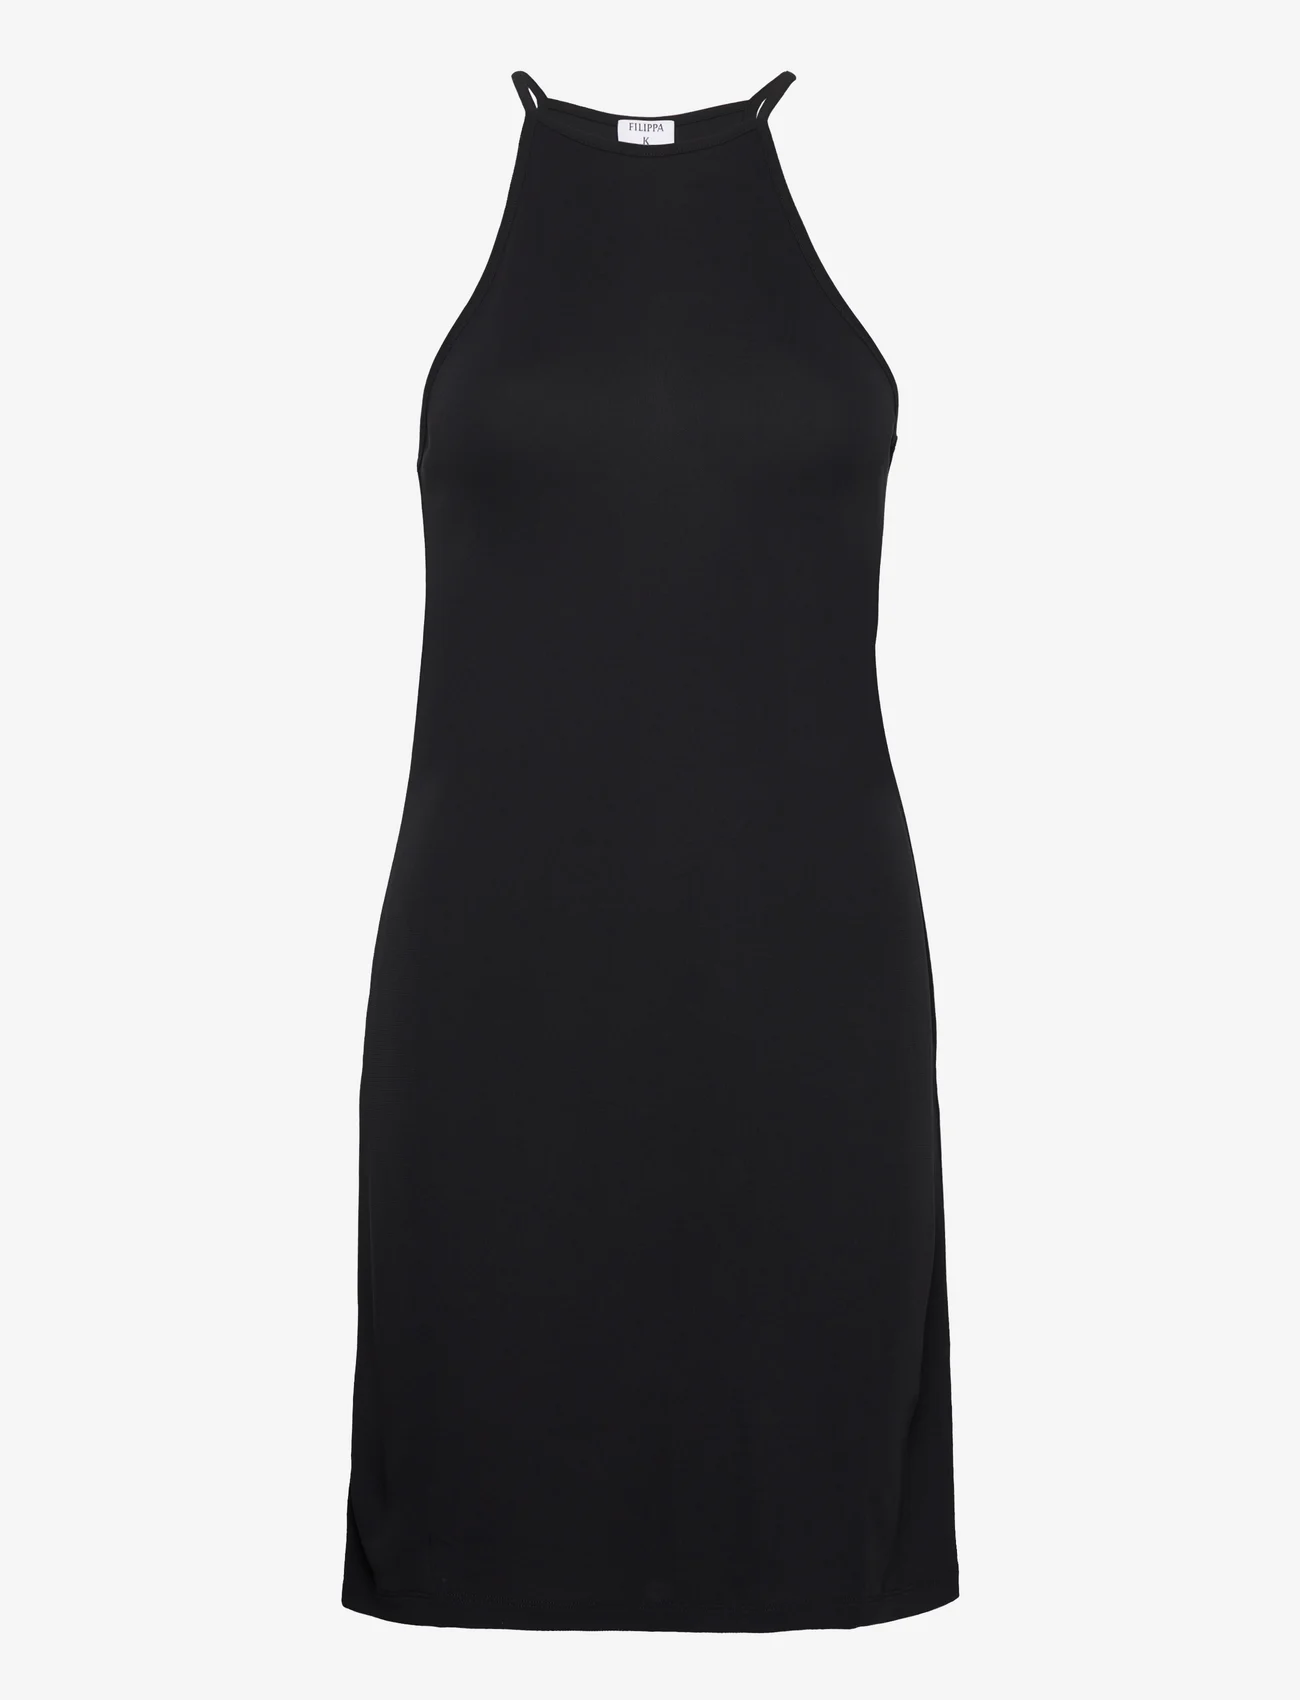 Filippa K - Strap Jersey Dress - bodycon dresses - black - 0